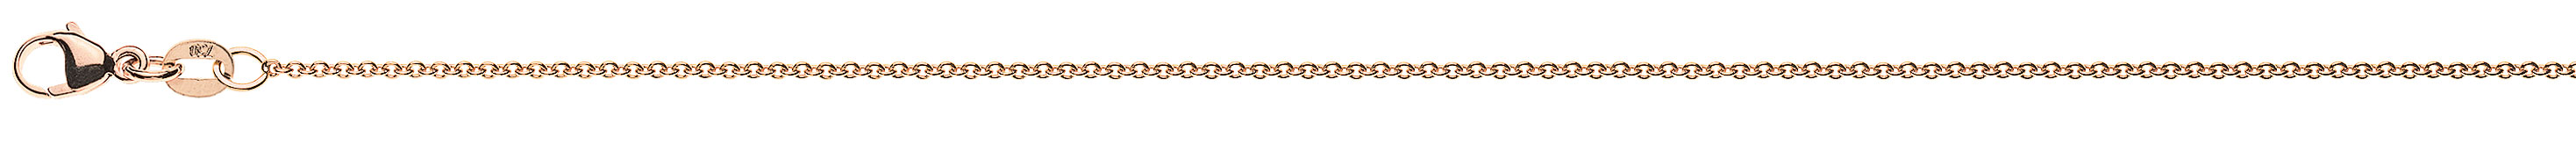 AURONOS Prestige Necklace Rose Gold 18K Round Anchor 45cm 1.3mm